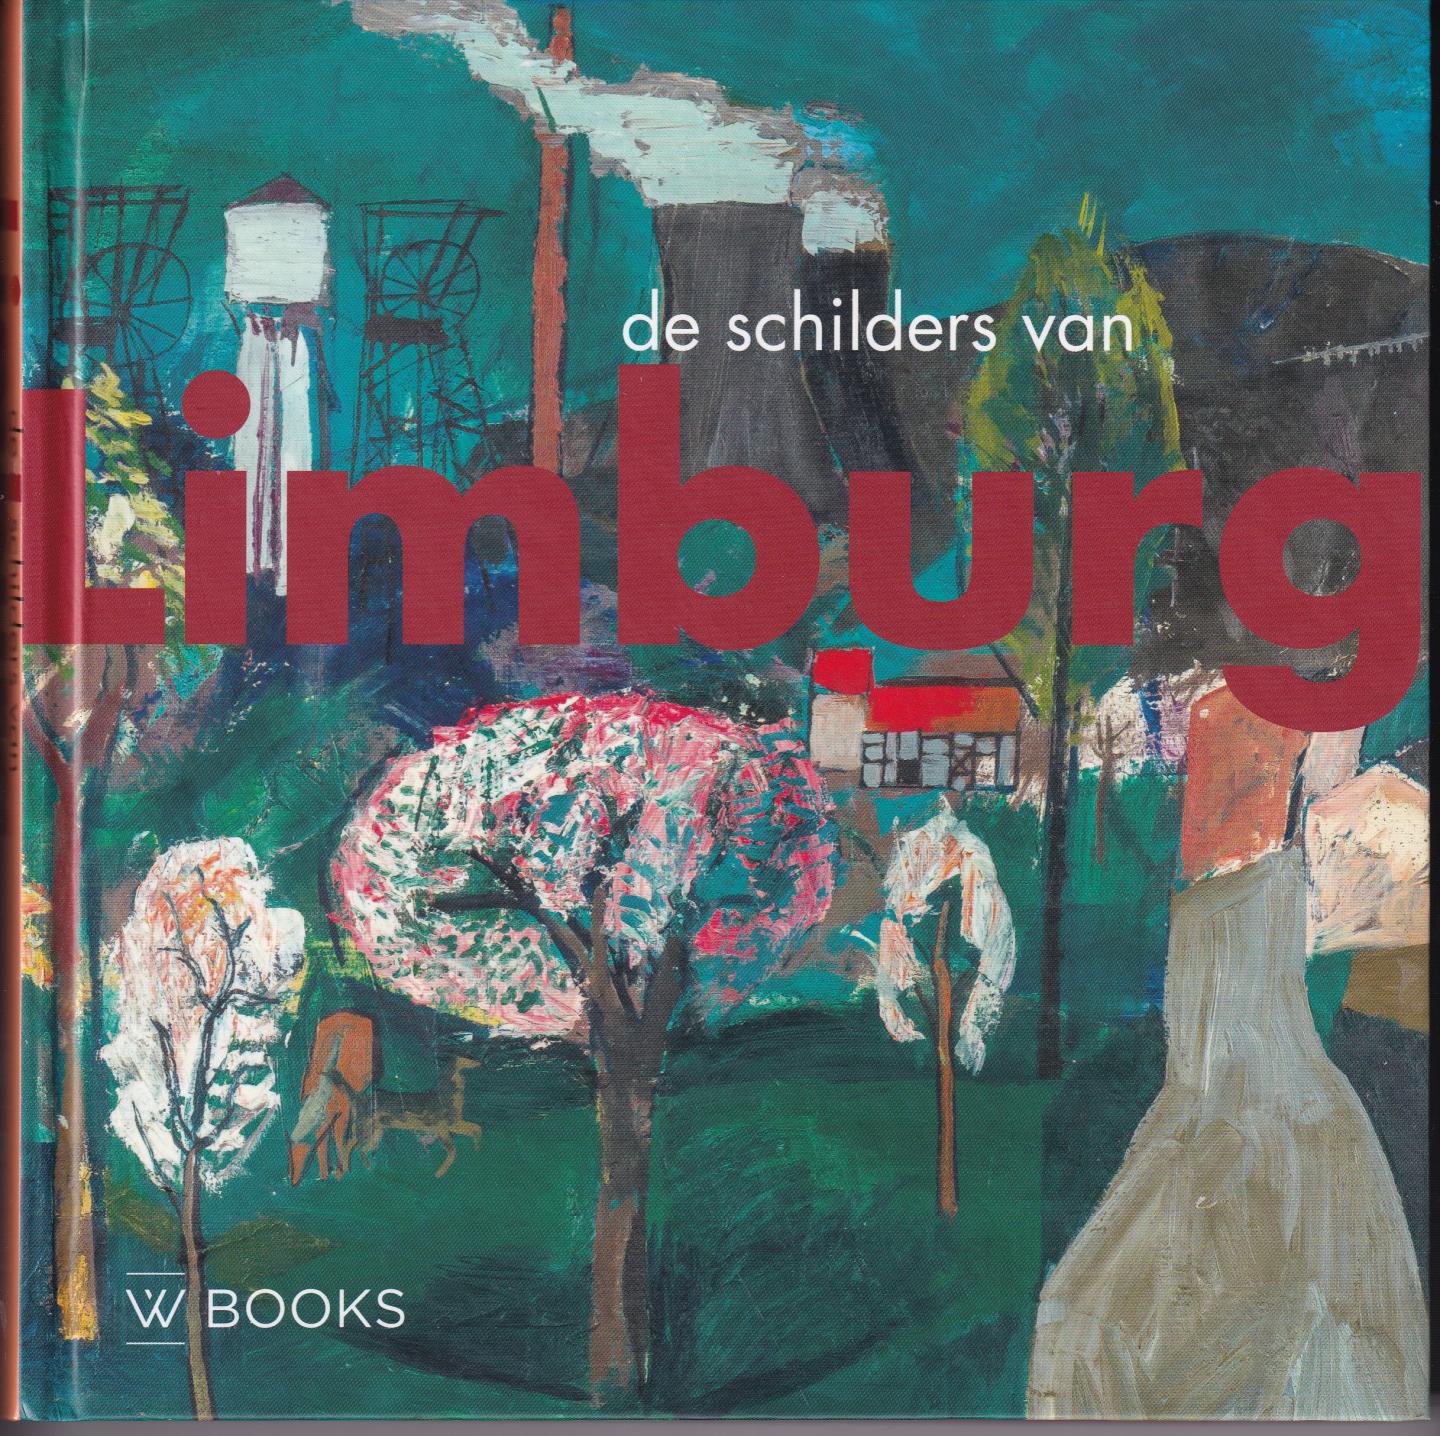 Himmelreich, Ad (ds1307) - De Schilders van Limburg